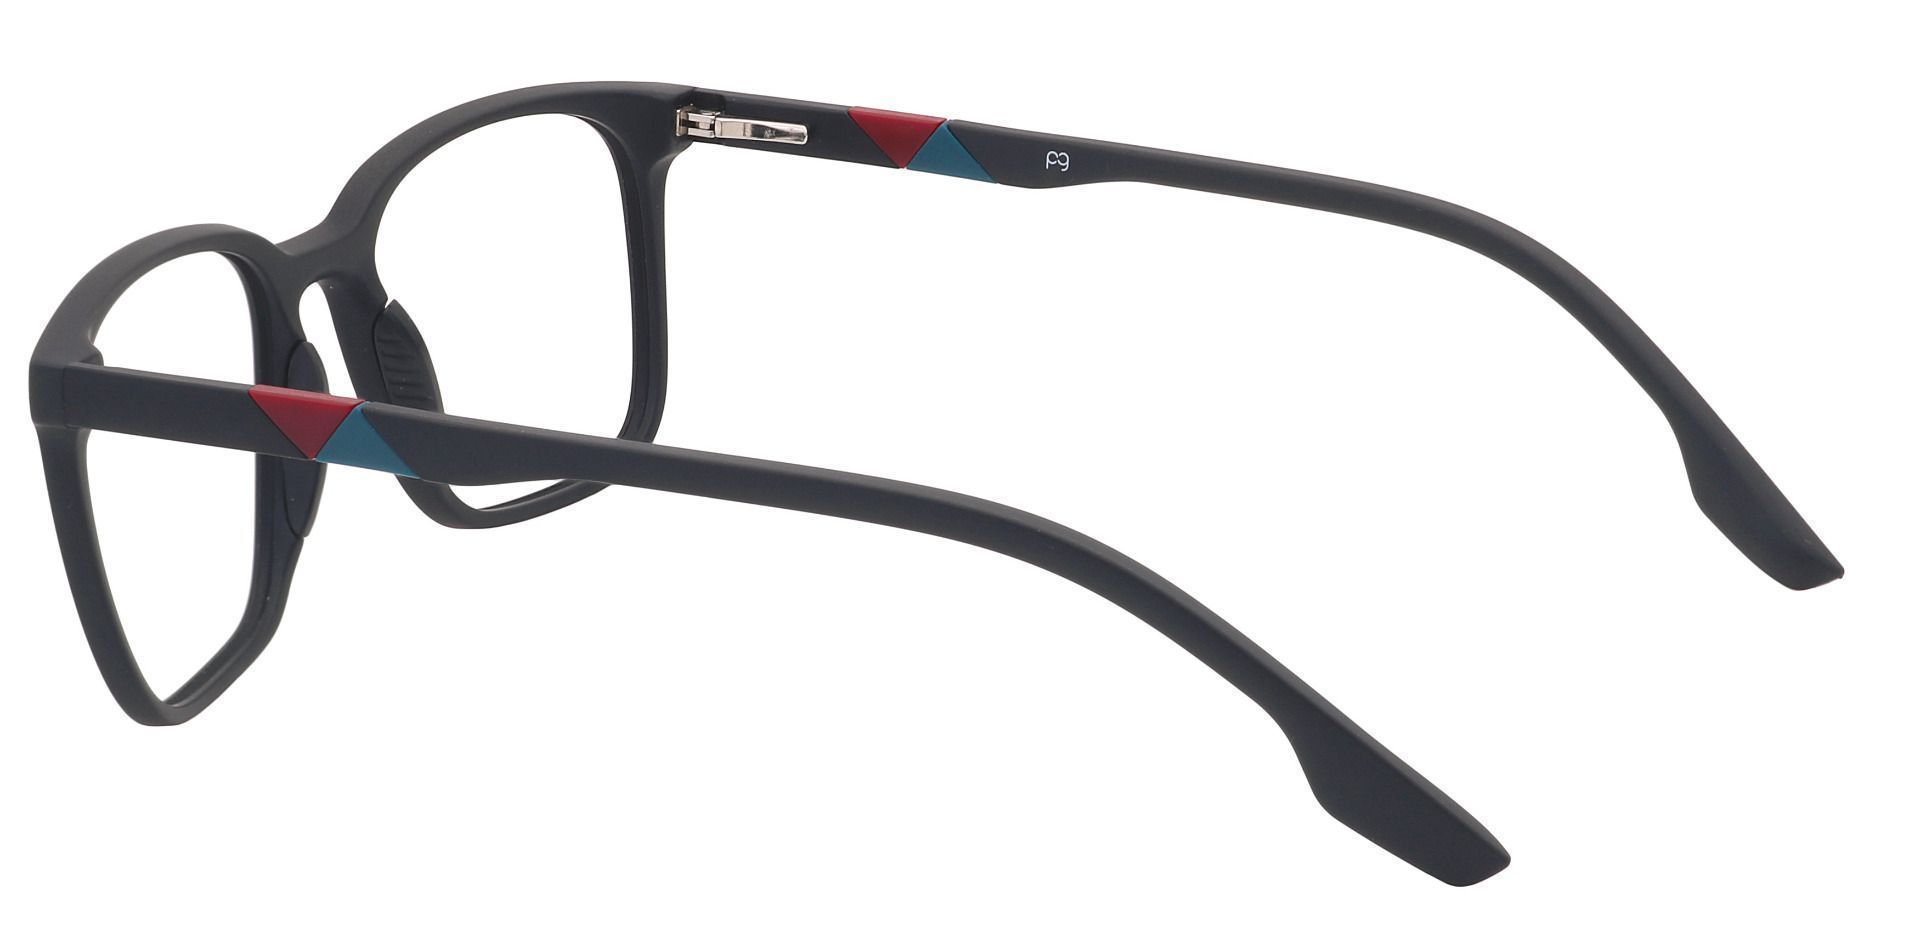 Elia Square Progressive Glasses - Black